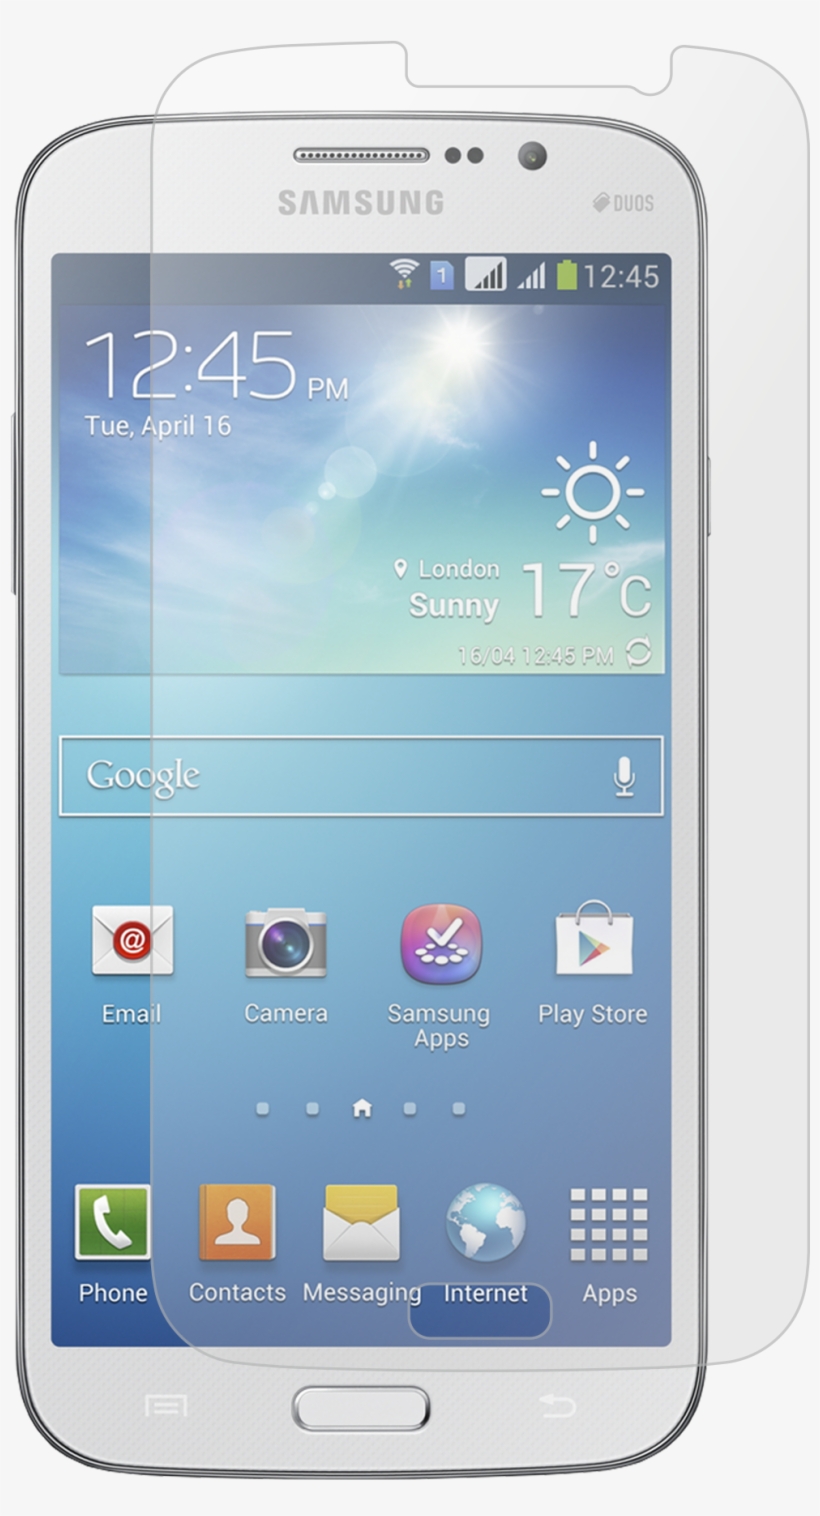 View Larger - Samsung Phone Low Price, transparent png #694744